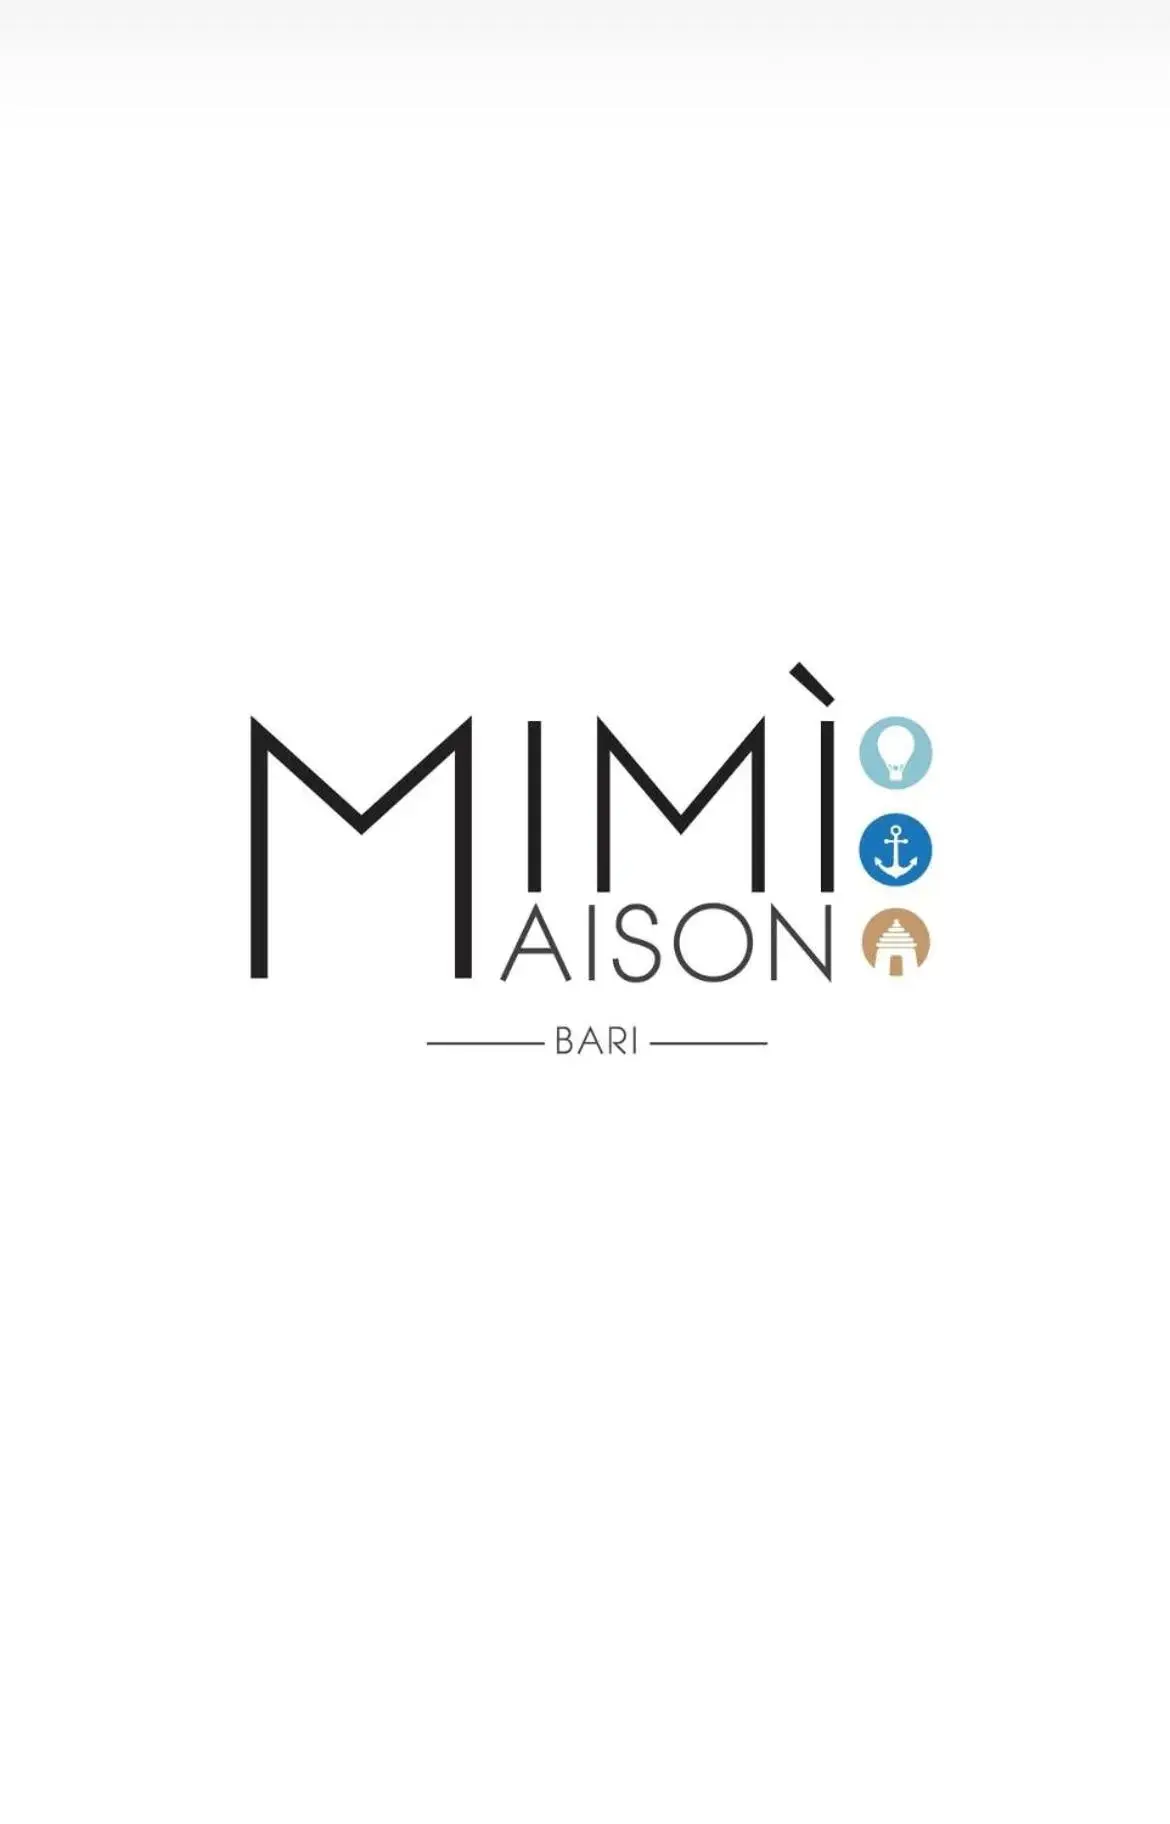 Property Logo/Sign in Mimì Maison Bari